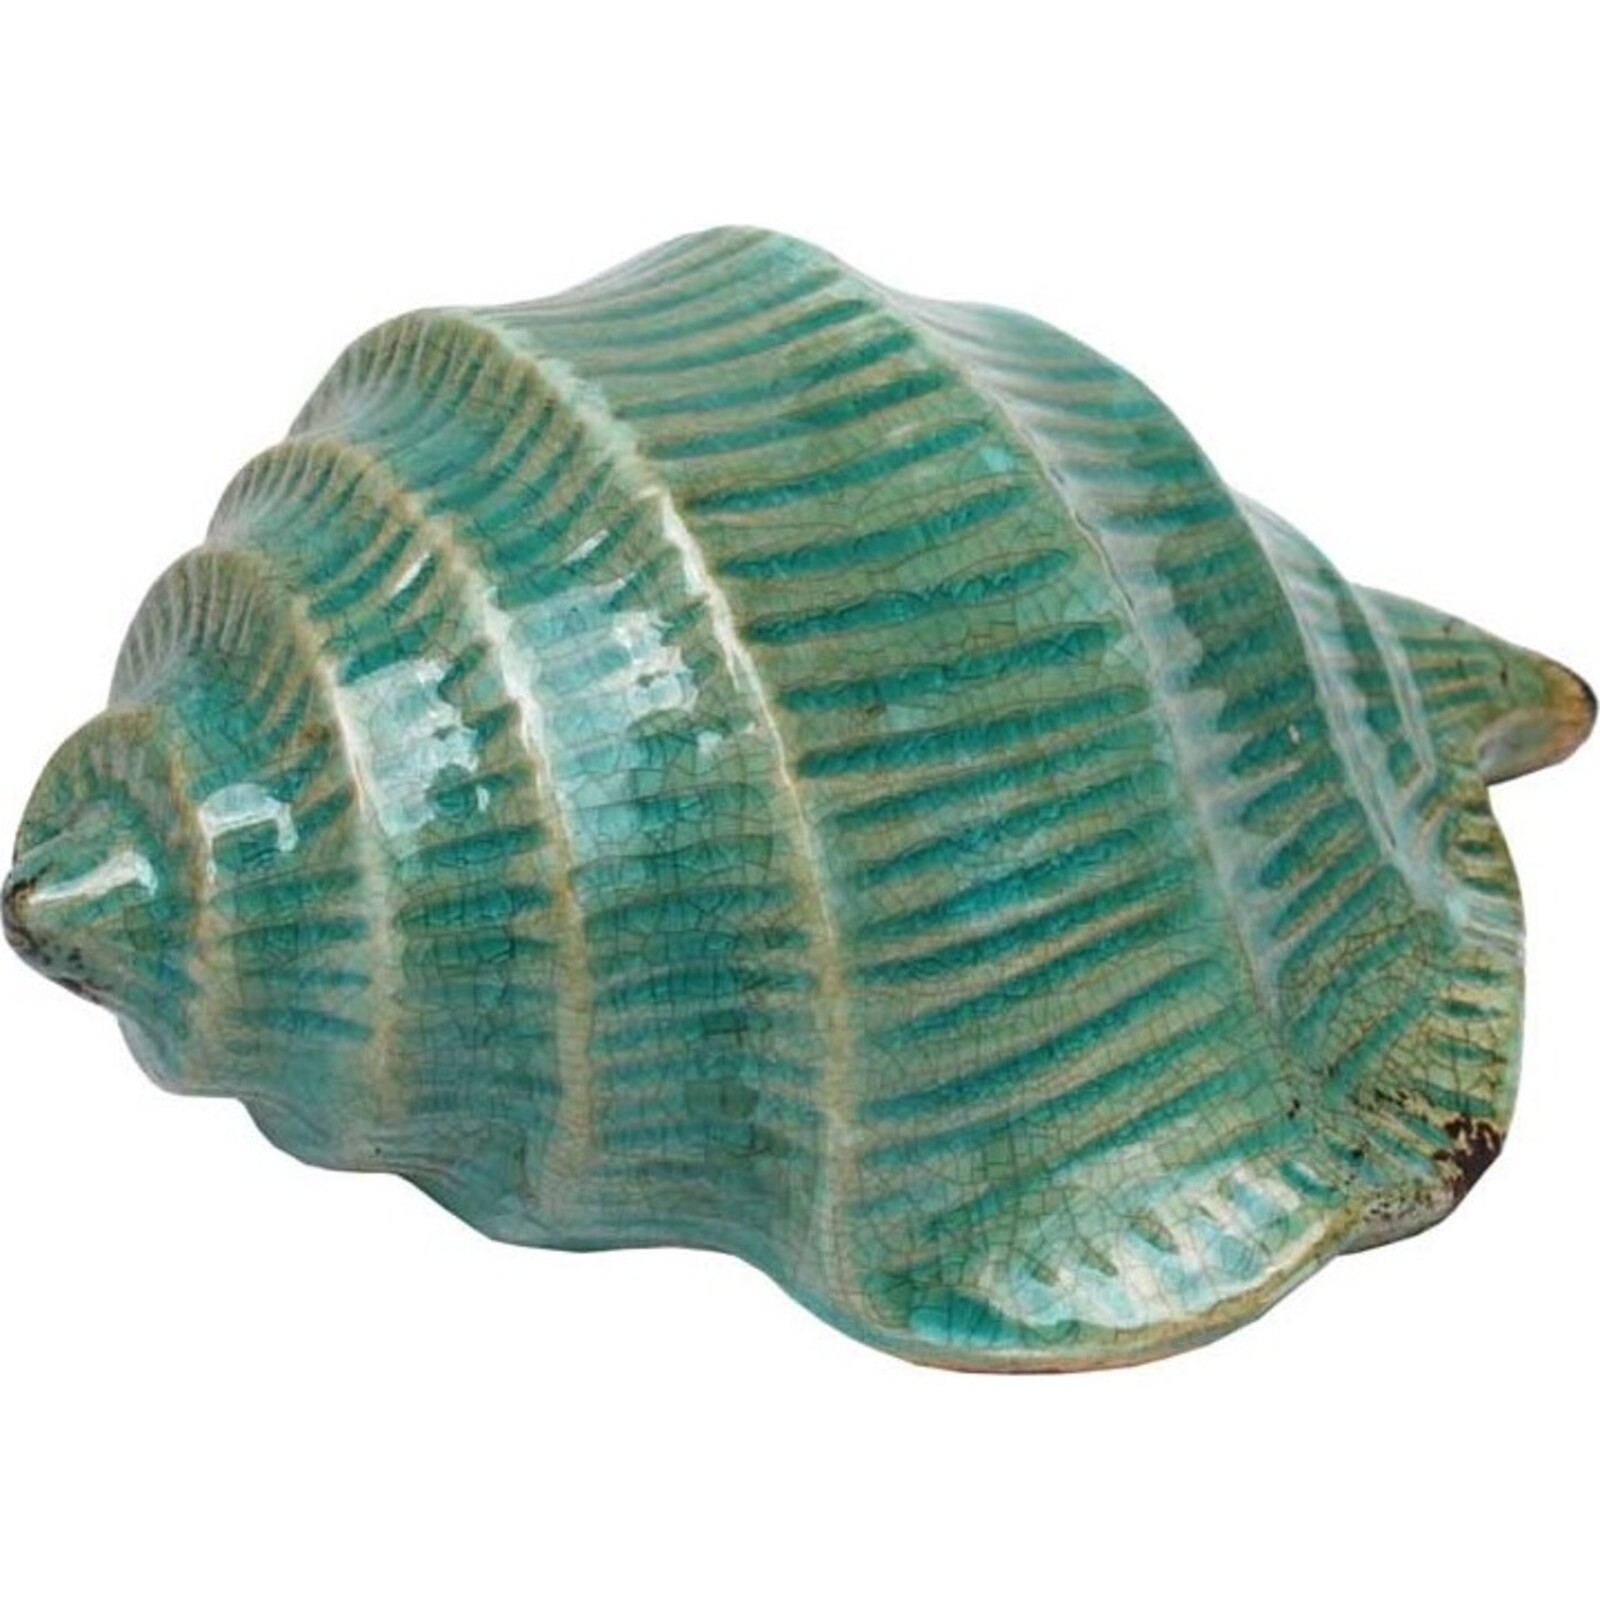 Ceramic Norton Shell